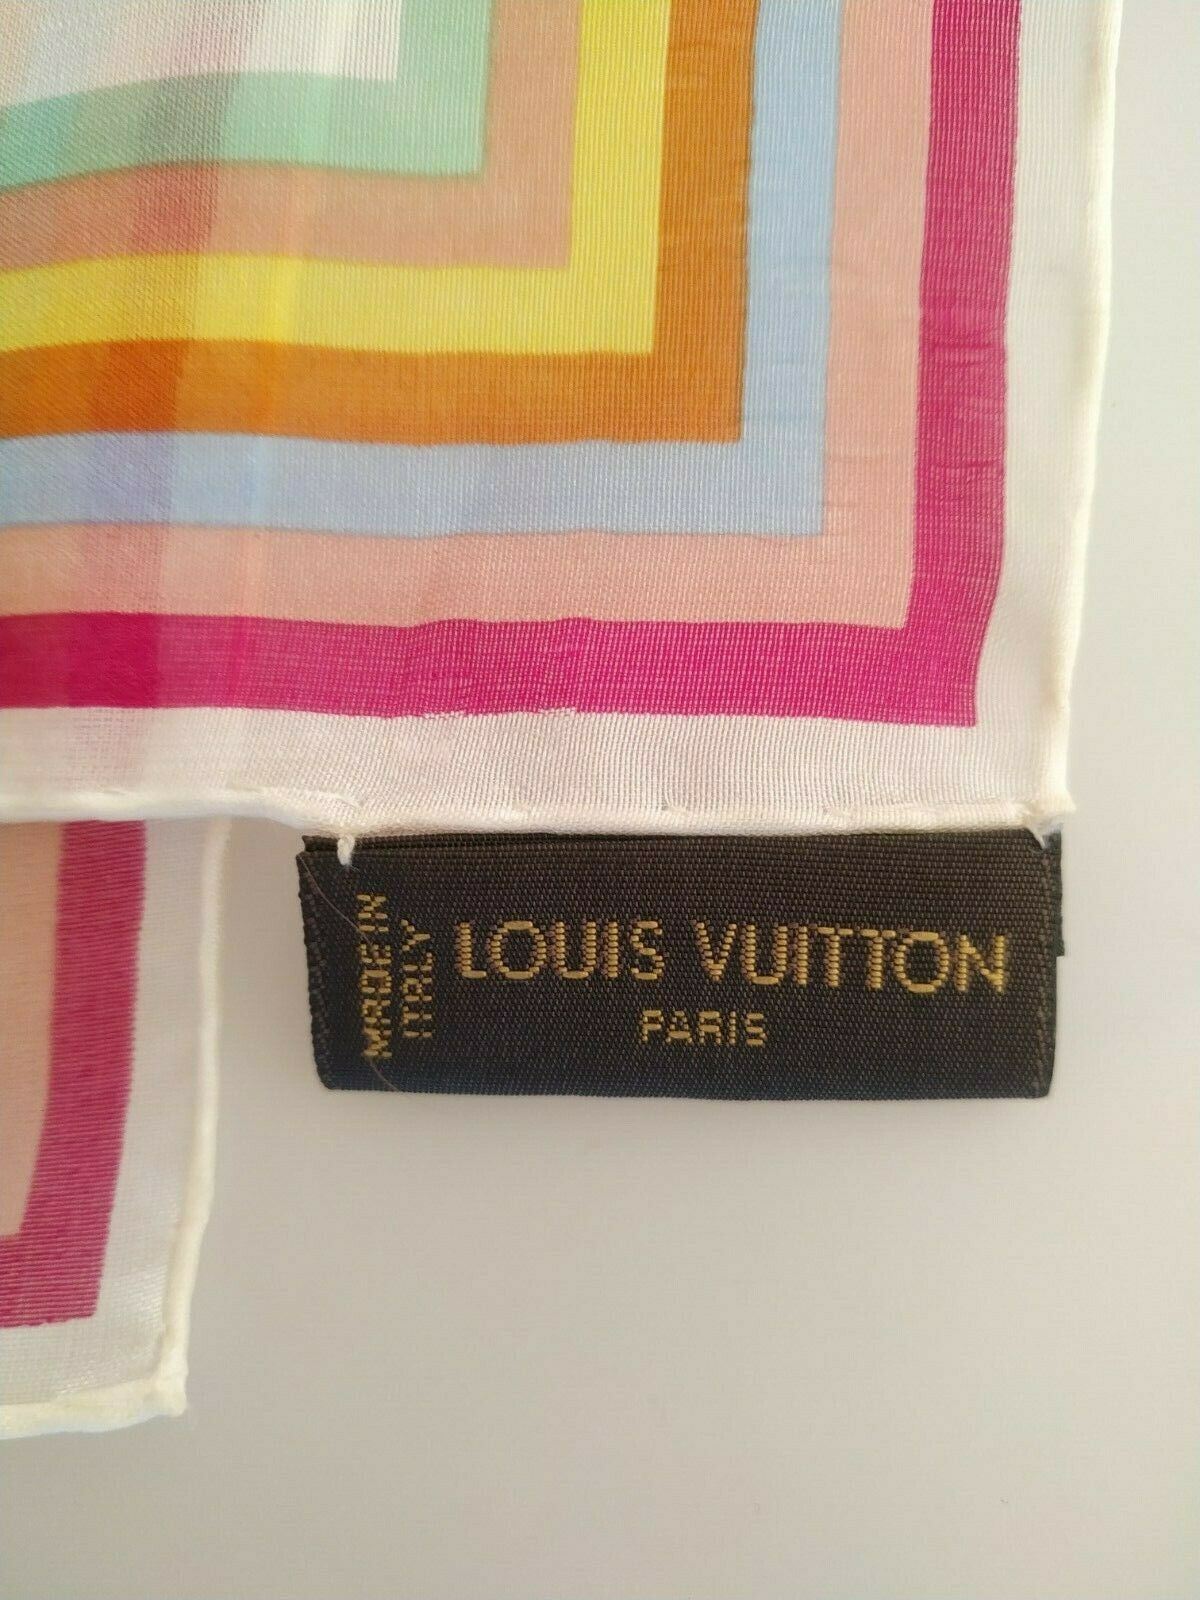 Limited Edition Louis Vuitton/Murakami Multicolore Monogram Cotton Scarf •  • • #lvscarf #louisvuitton #lv #lvmurakami #lvmono #lvlover #lvaddict, By Posh Boutique